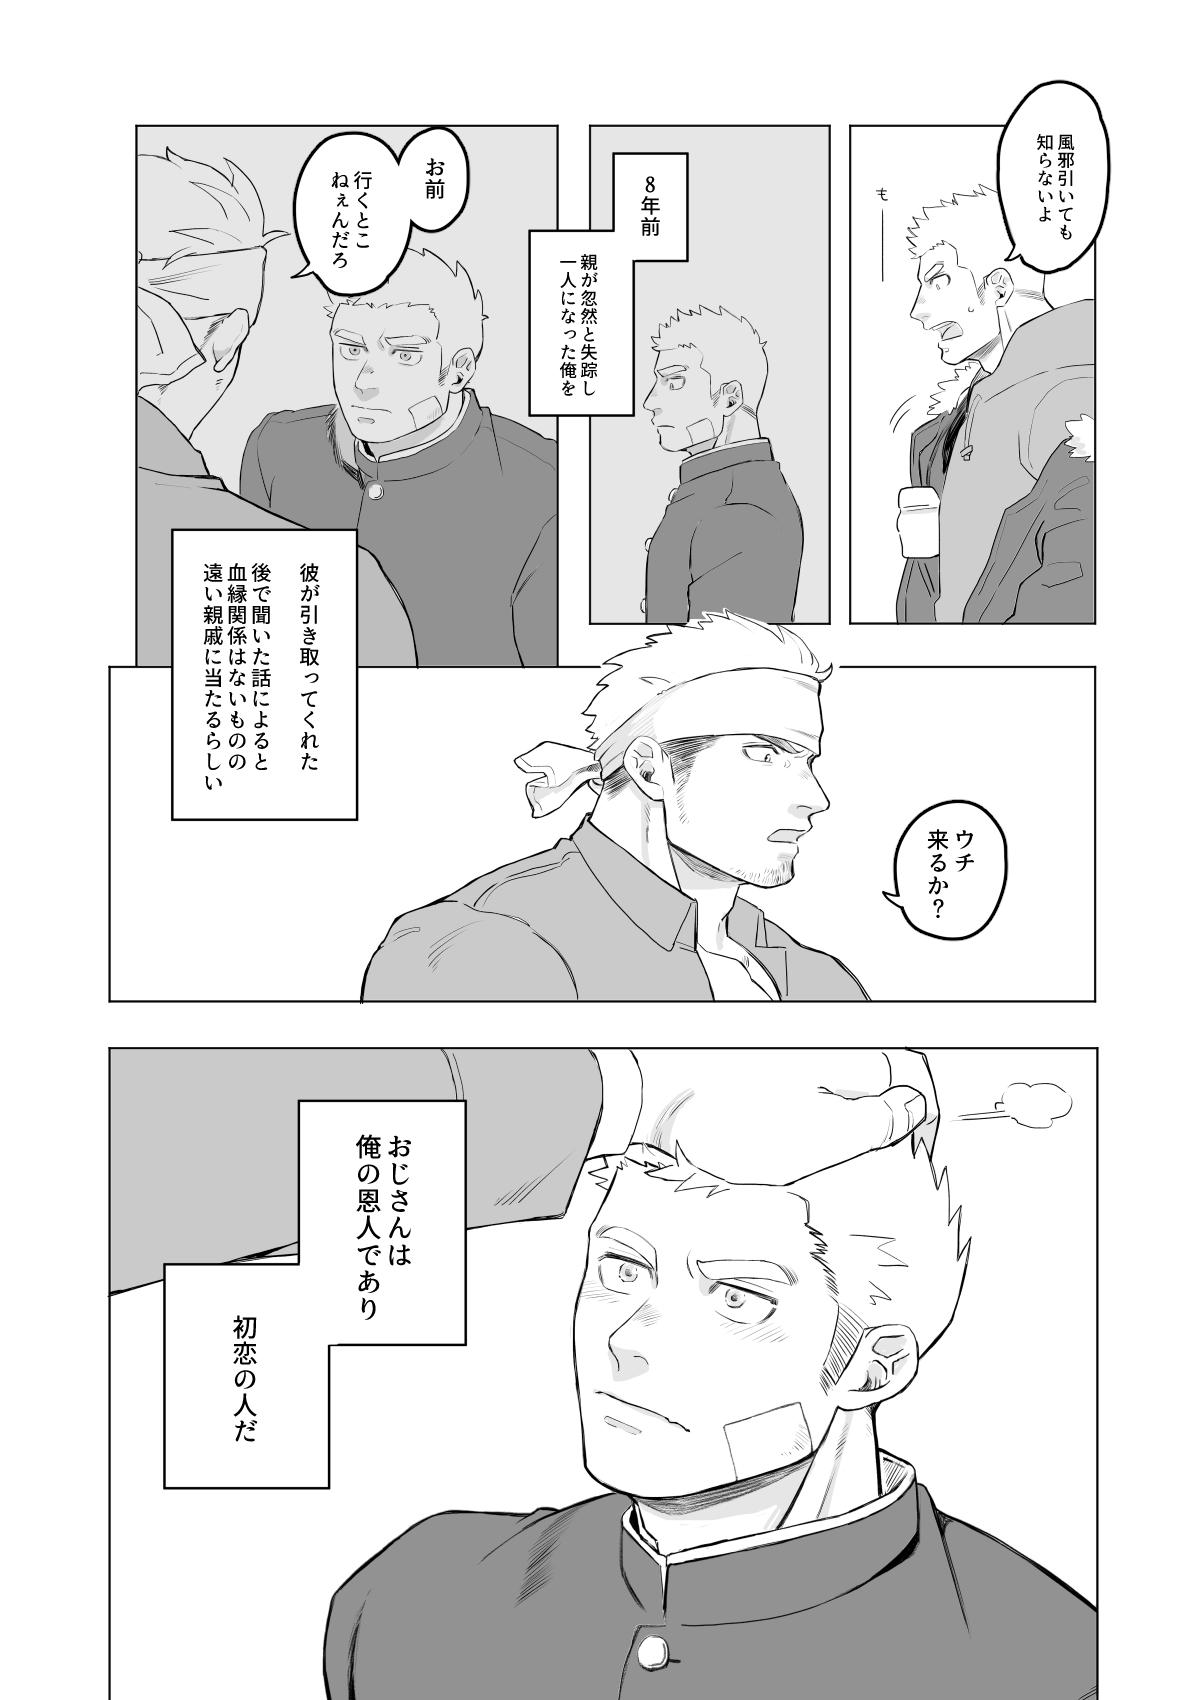 Thief ごめんねおじさん - Sorry uncle - Original Tats - Page 2